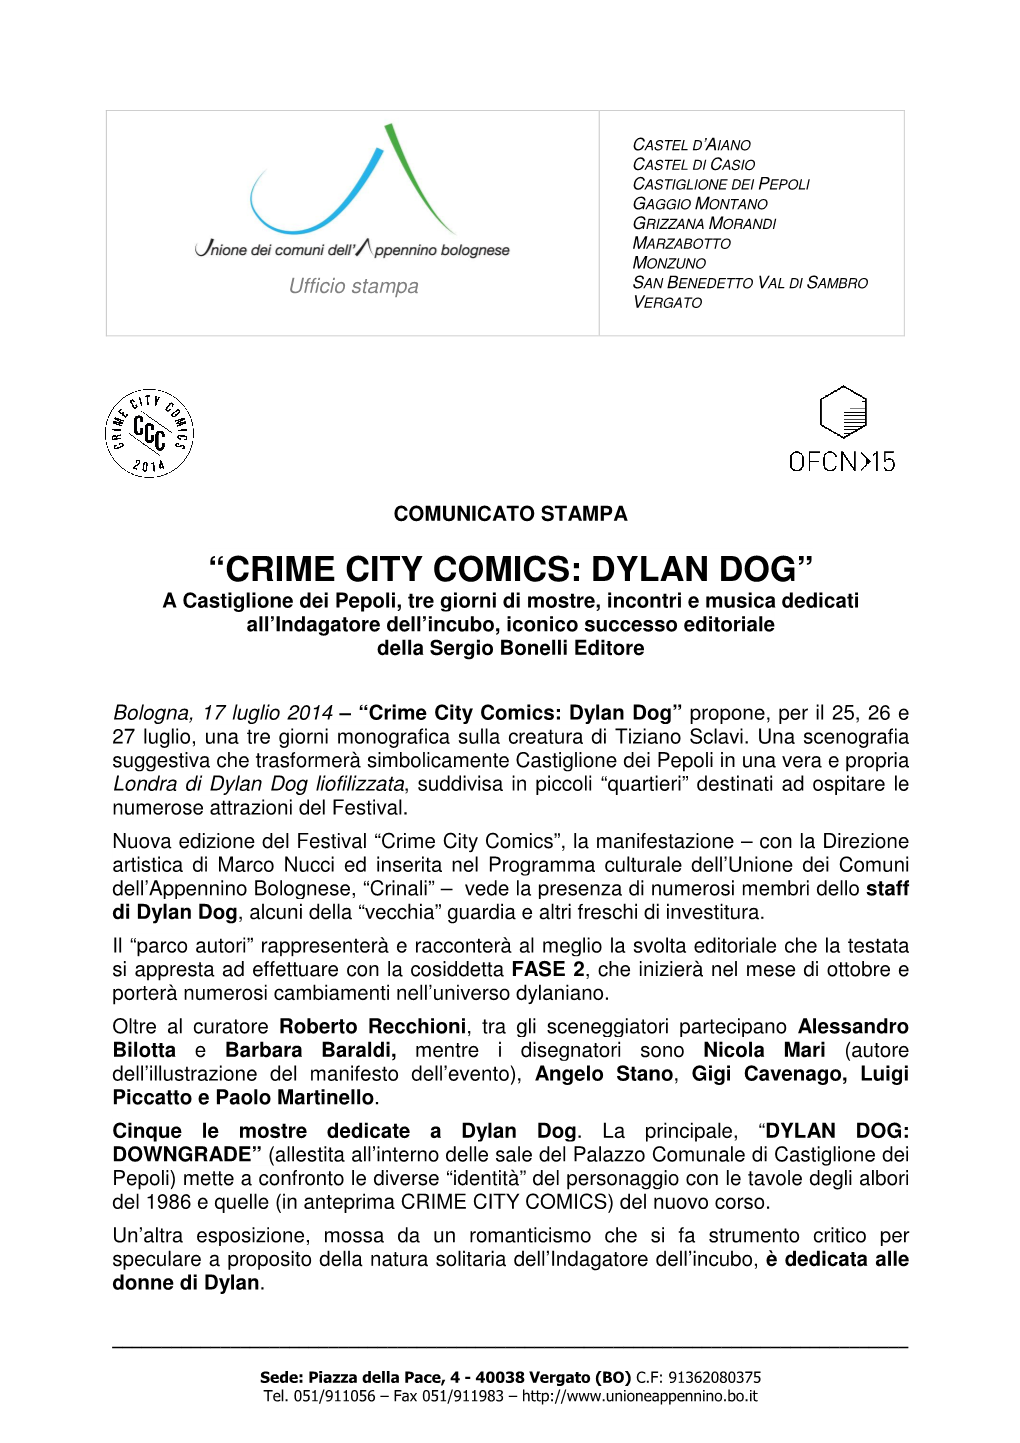 “Crime City Comics: Dylan Dog”